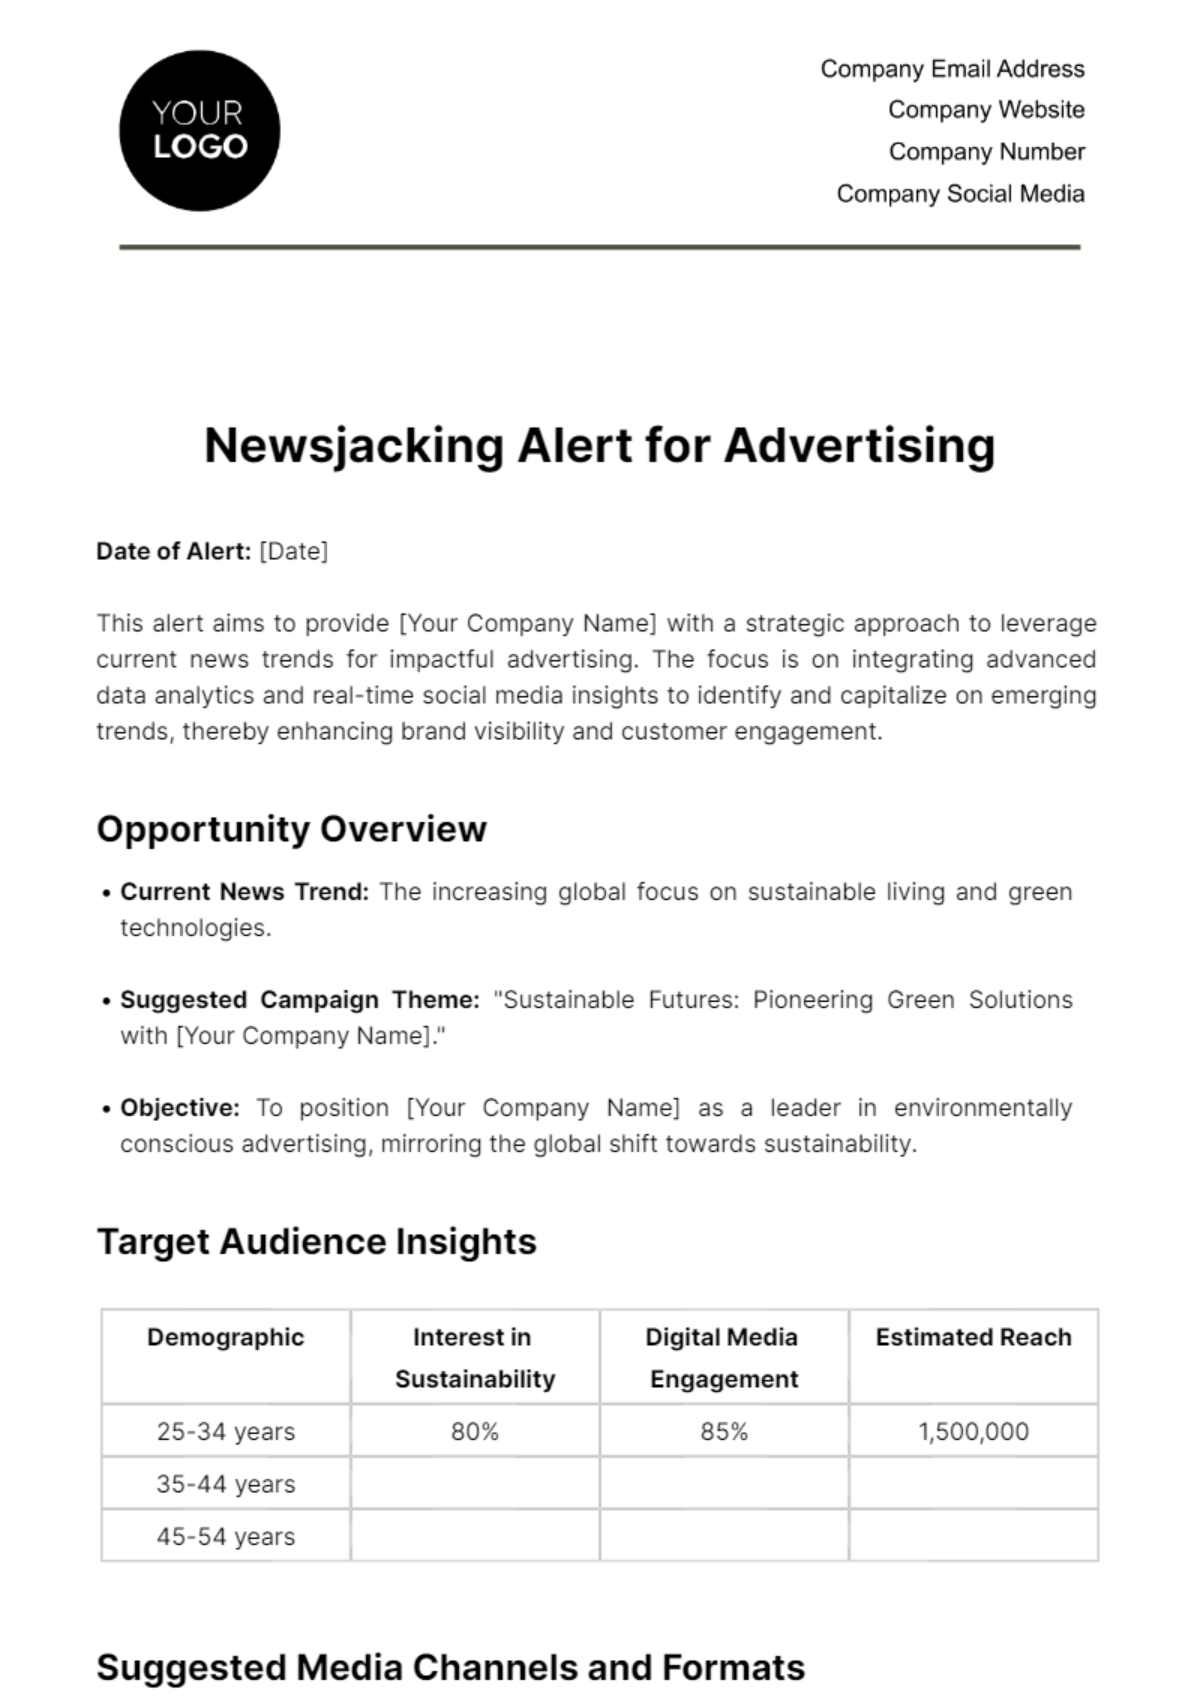 Free Newsjacking Alert for Advertising Template